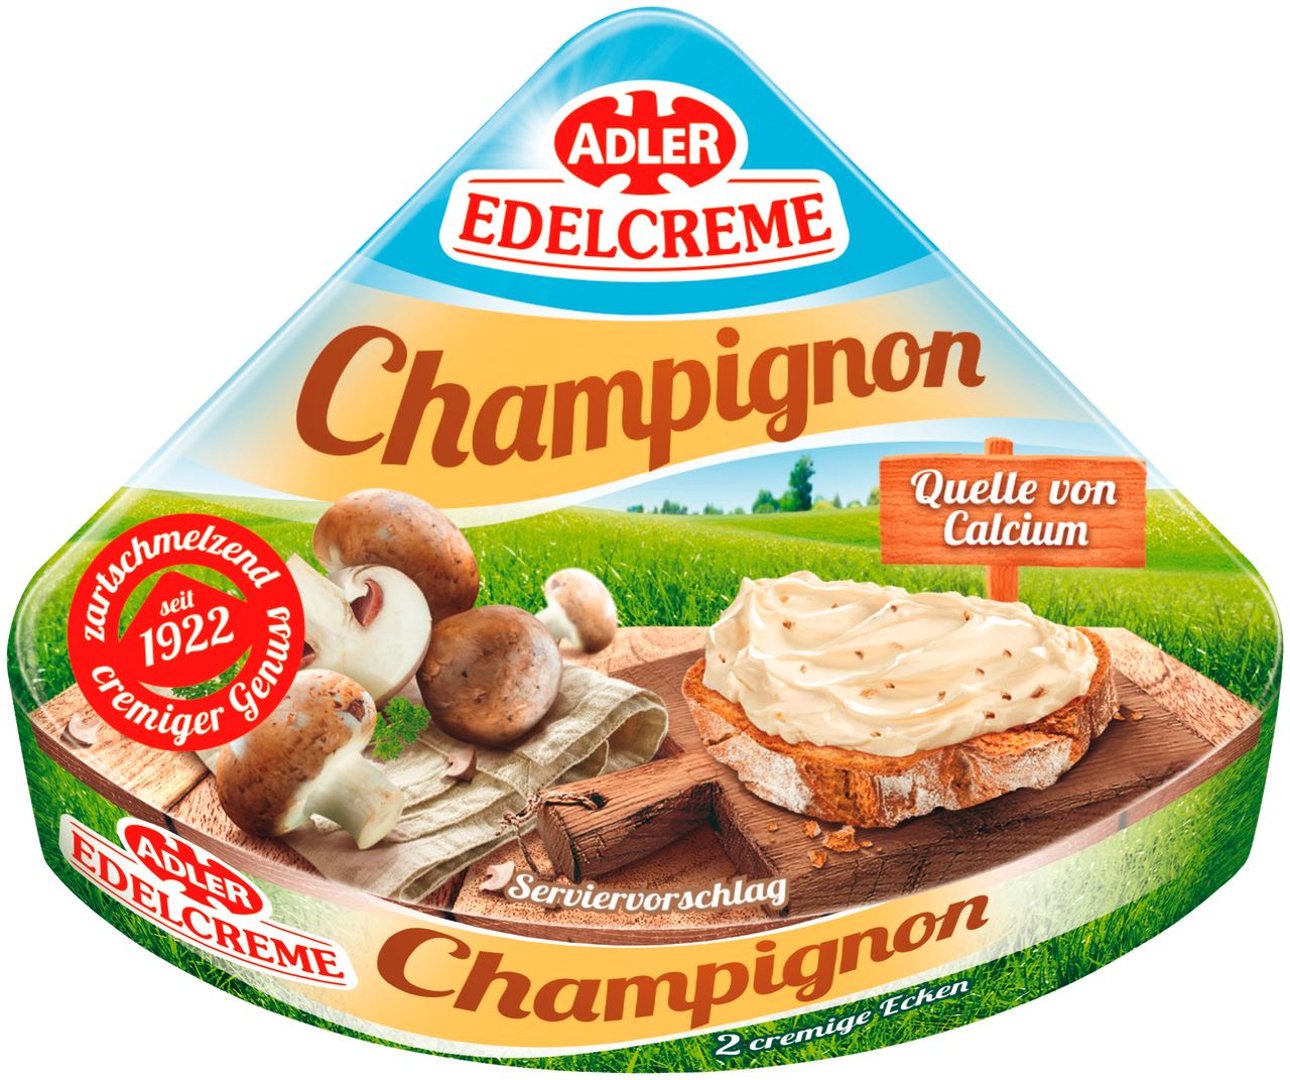 Adler - Edelcreme Champignon 57 % Fett i. Tr. Schmelzkäsezubereitung 100 g Stück